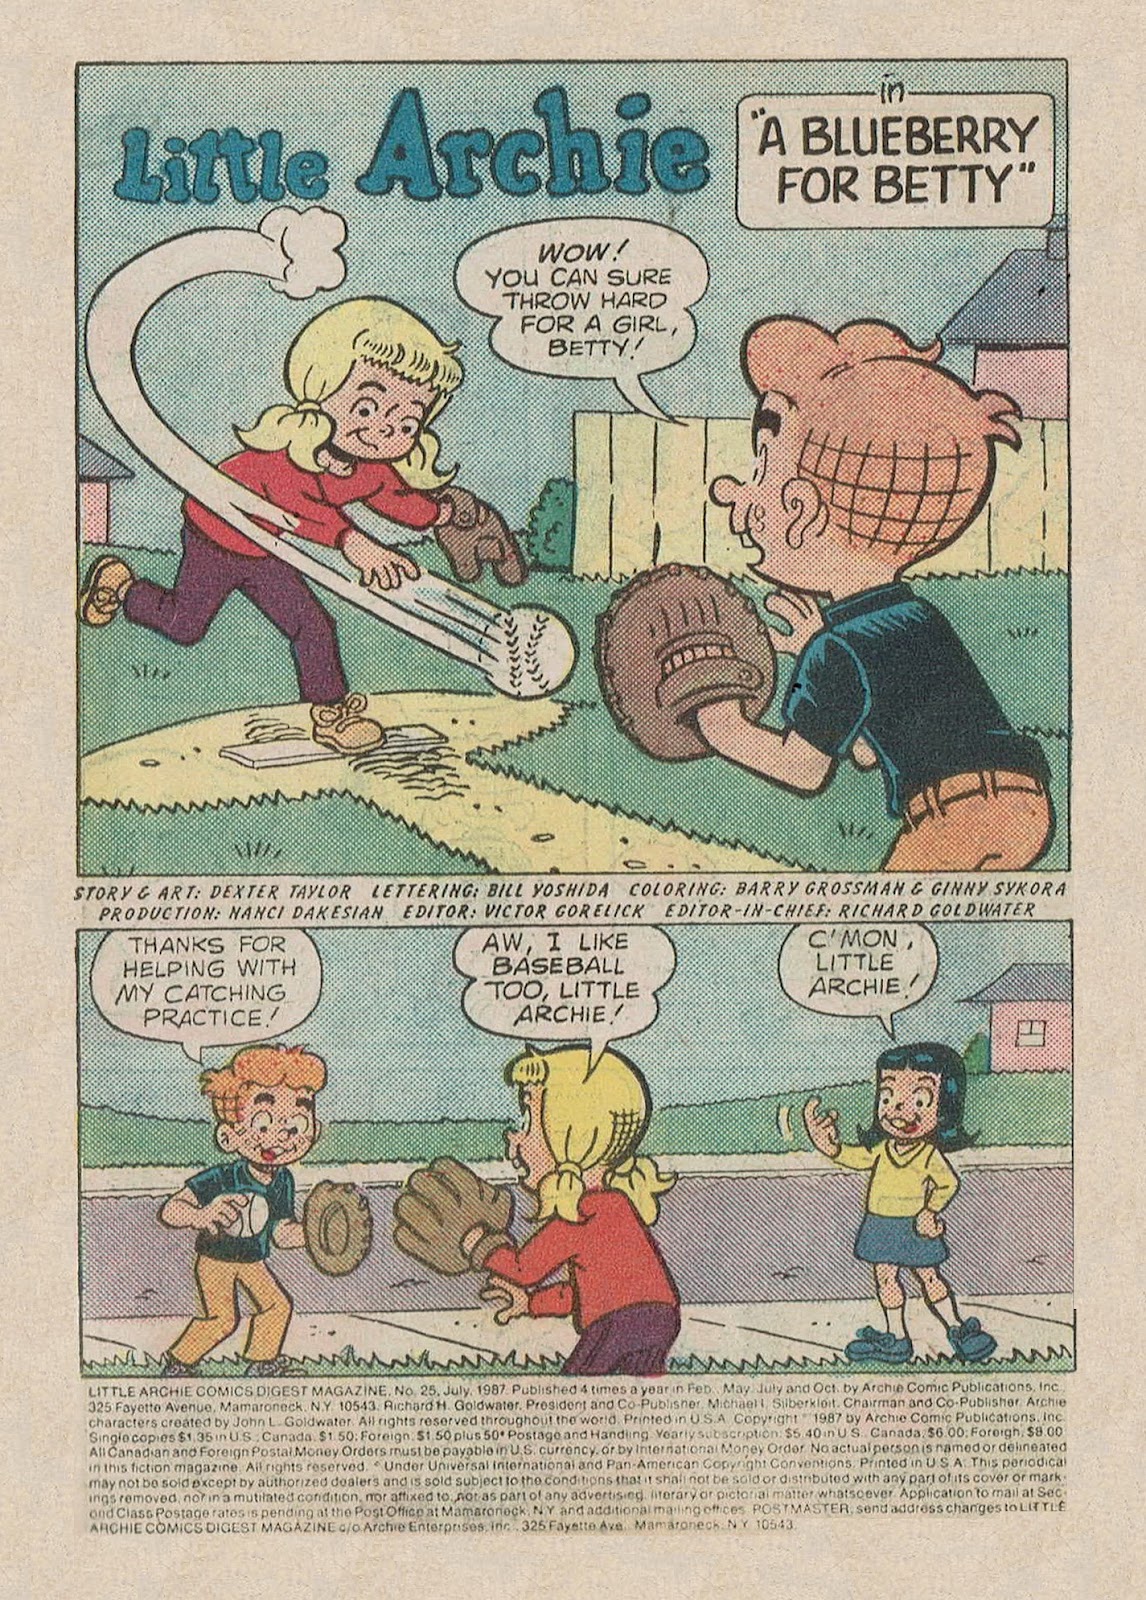 Little Archie Comics Digest Magazine issue 25 - Page 3